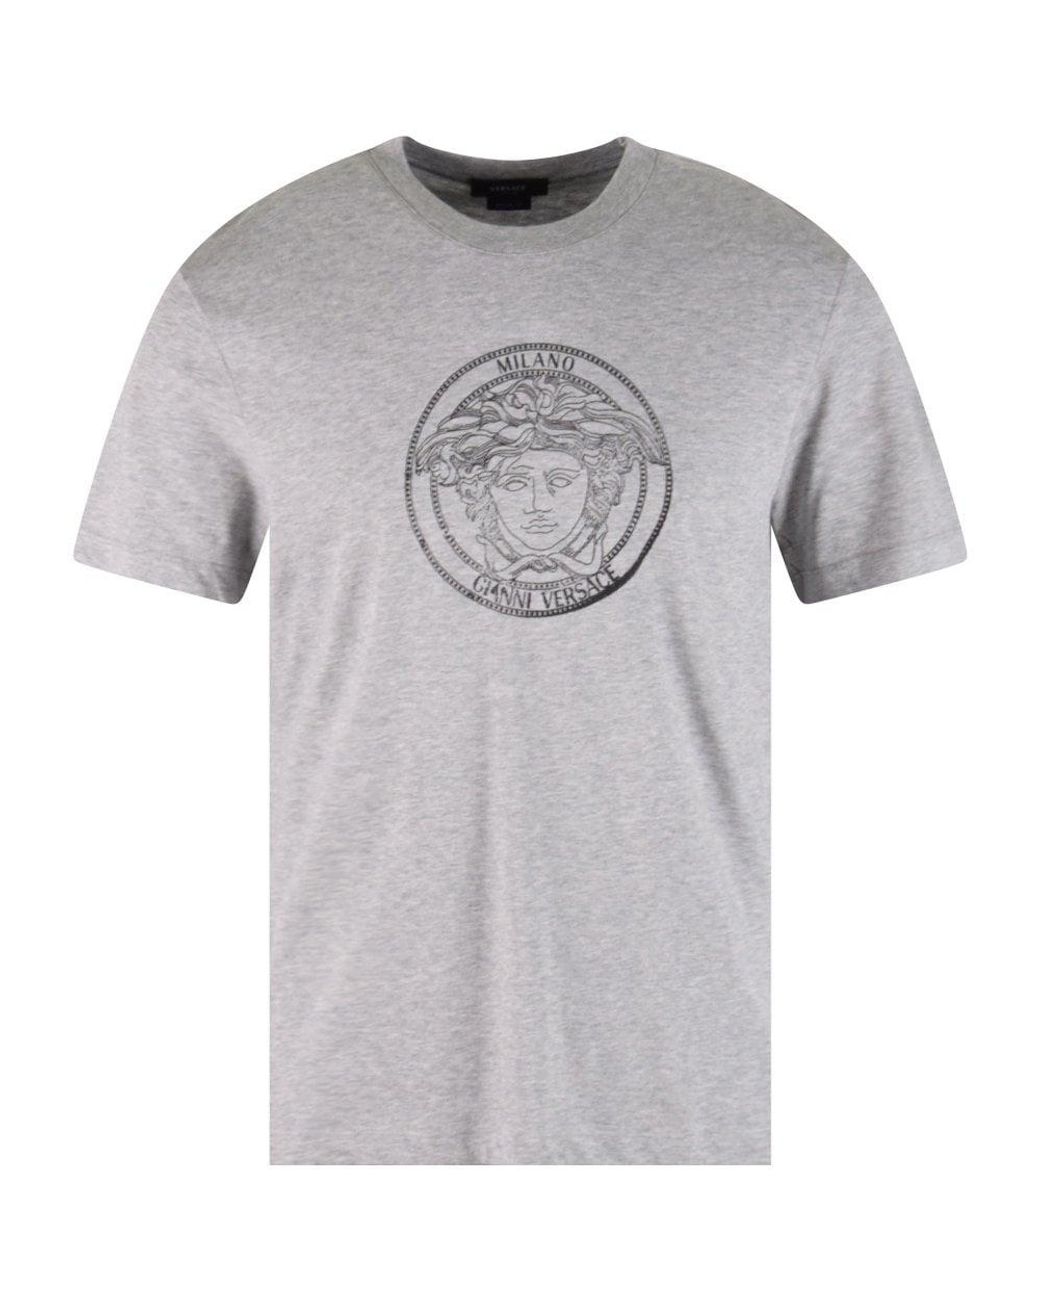 Versace Grey T Shirt Sellers, SAVE 54% - raptorunderlayment.com